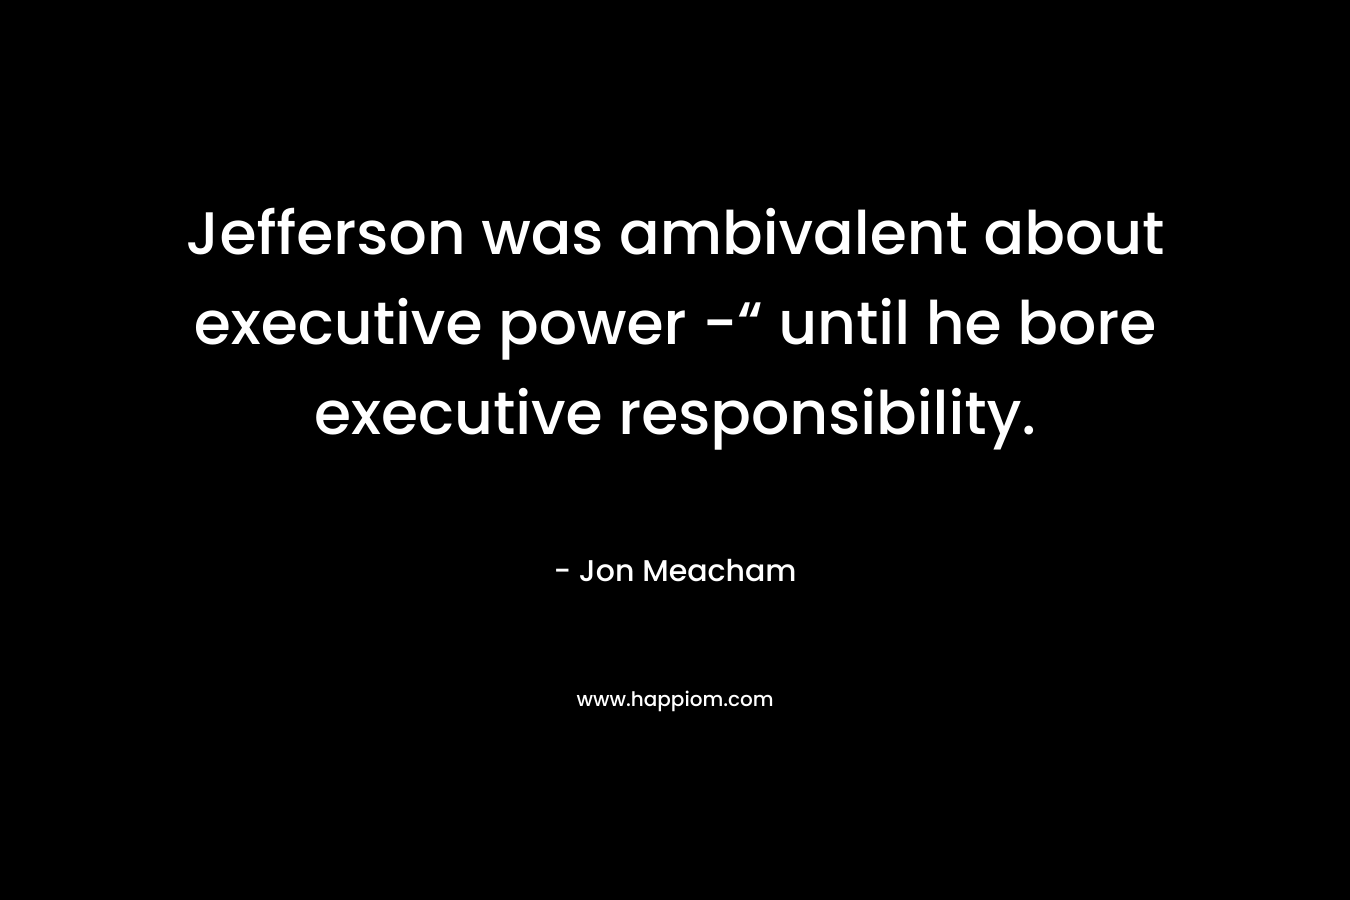 Jefferson was ambivalent about executive power -“ until he bore executive responsibility.